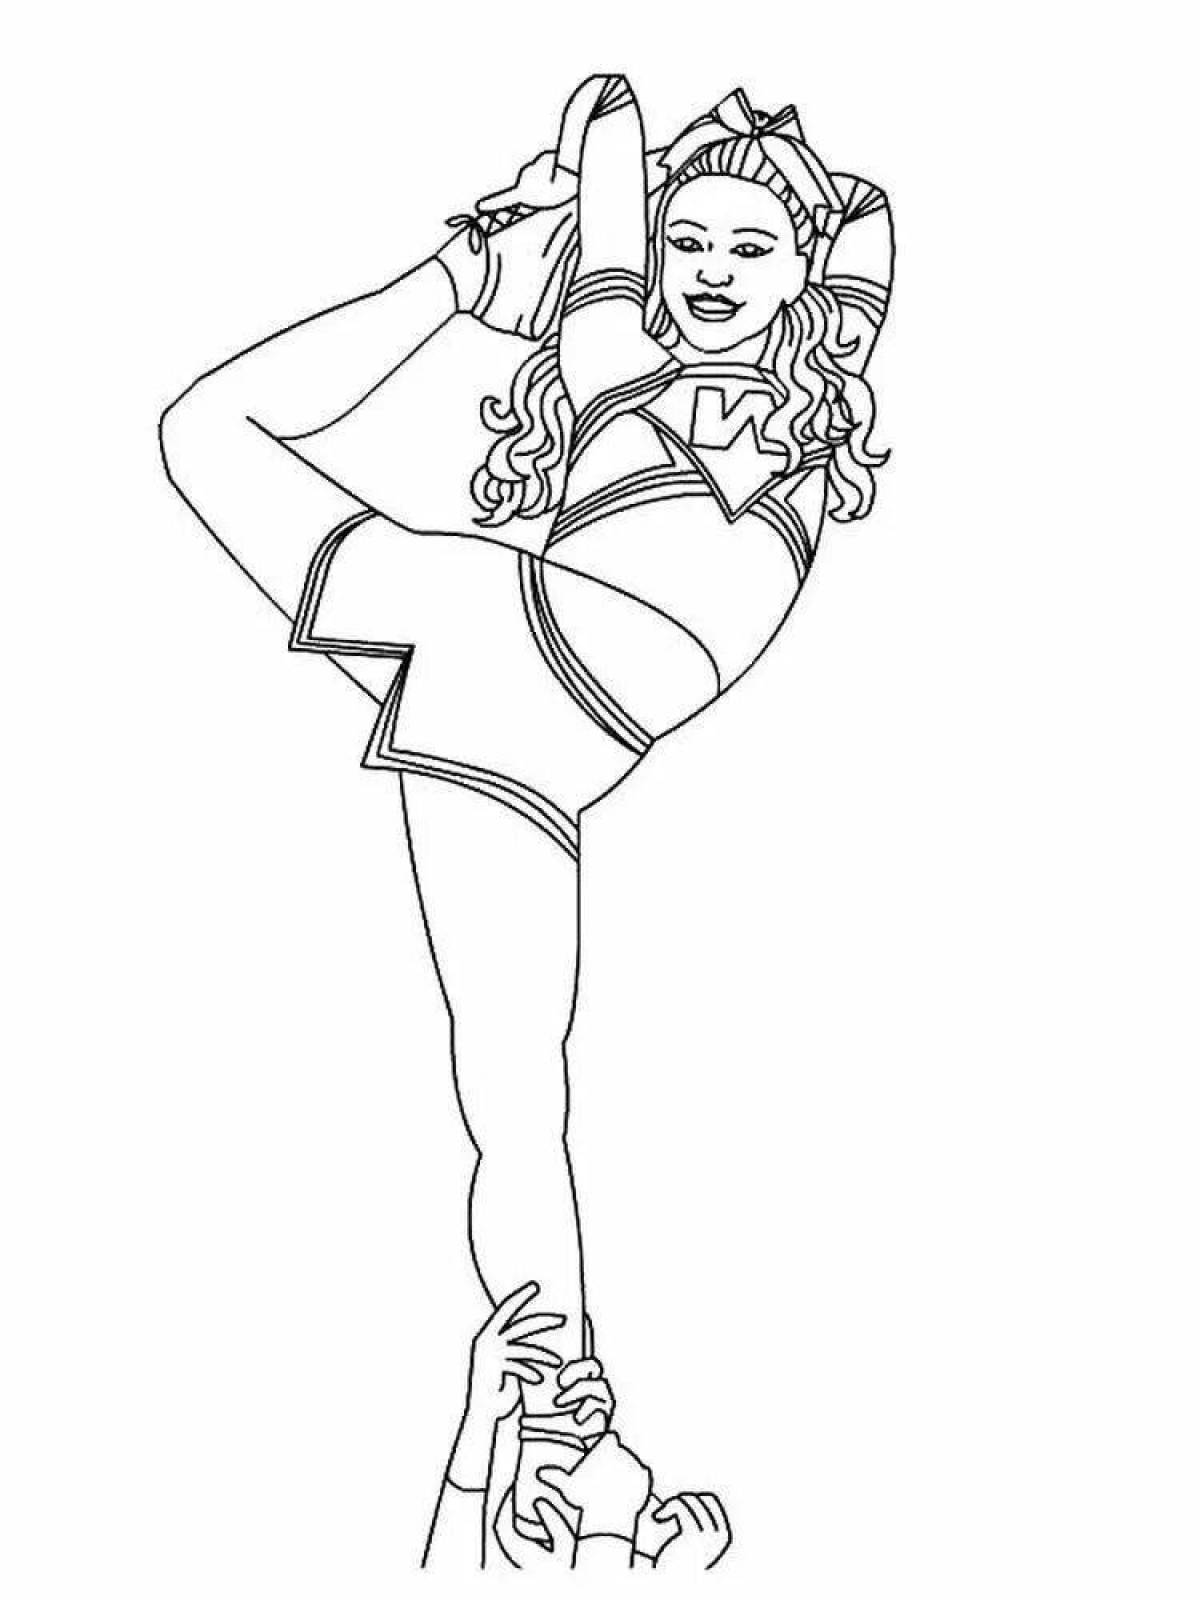 Cheerleader coloring page